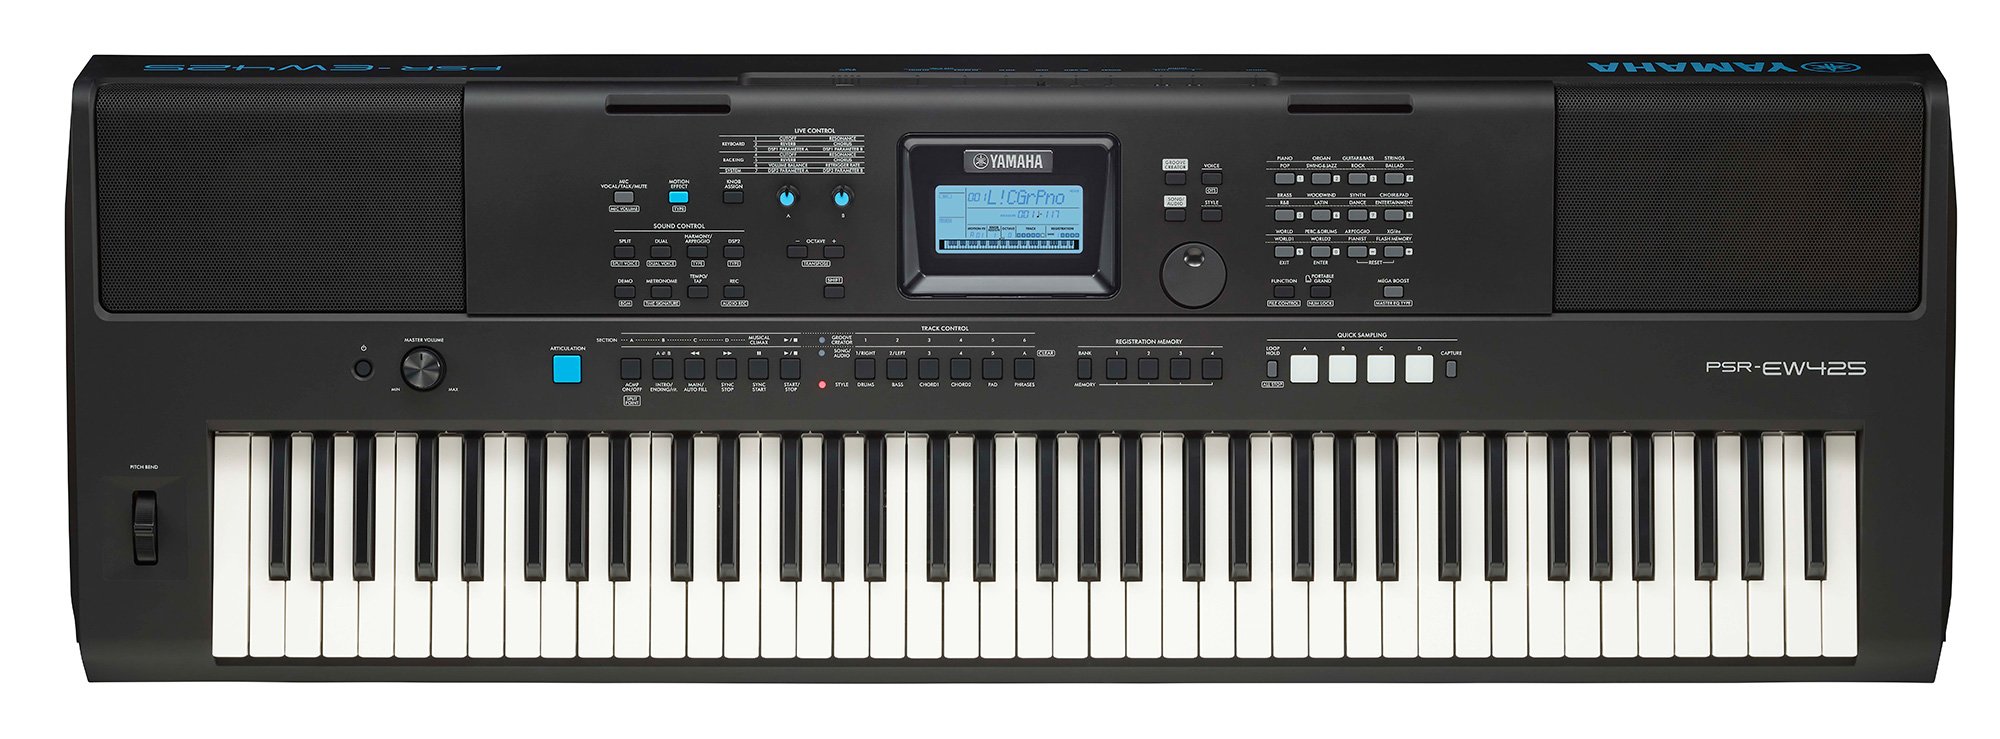 Se Yamaha PSR-EW425 Keyboard (Sort) hos Drum City